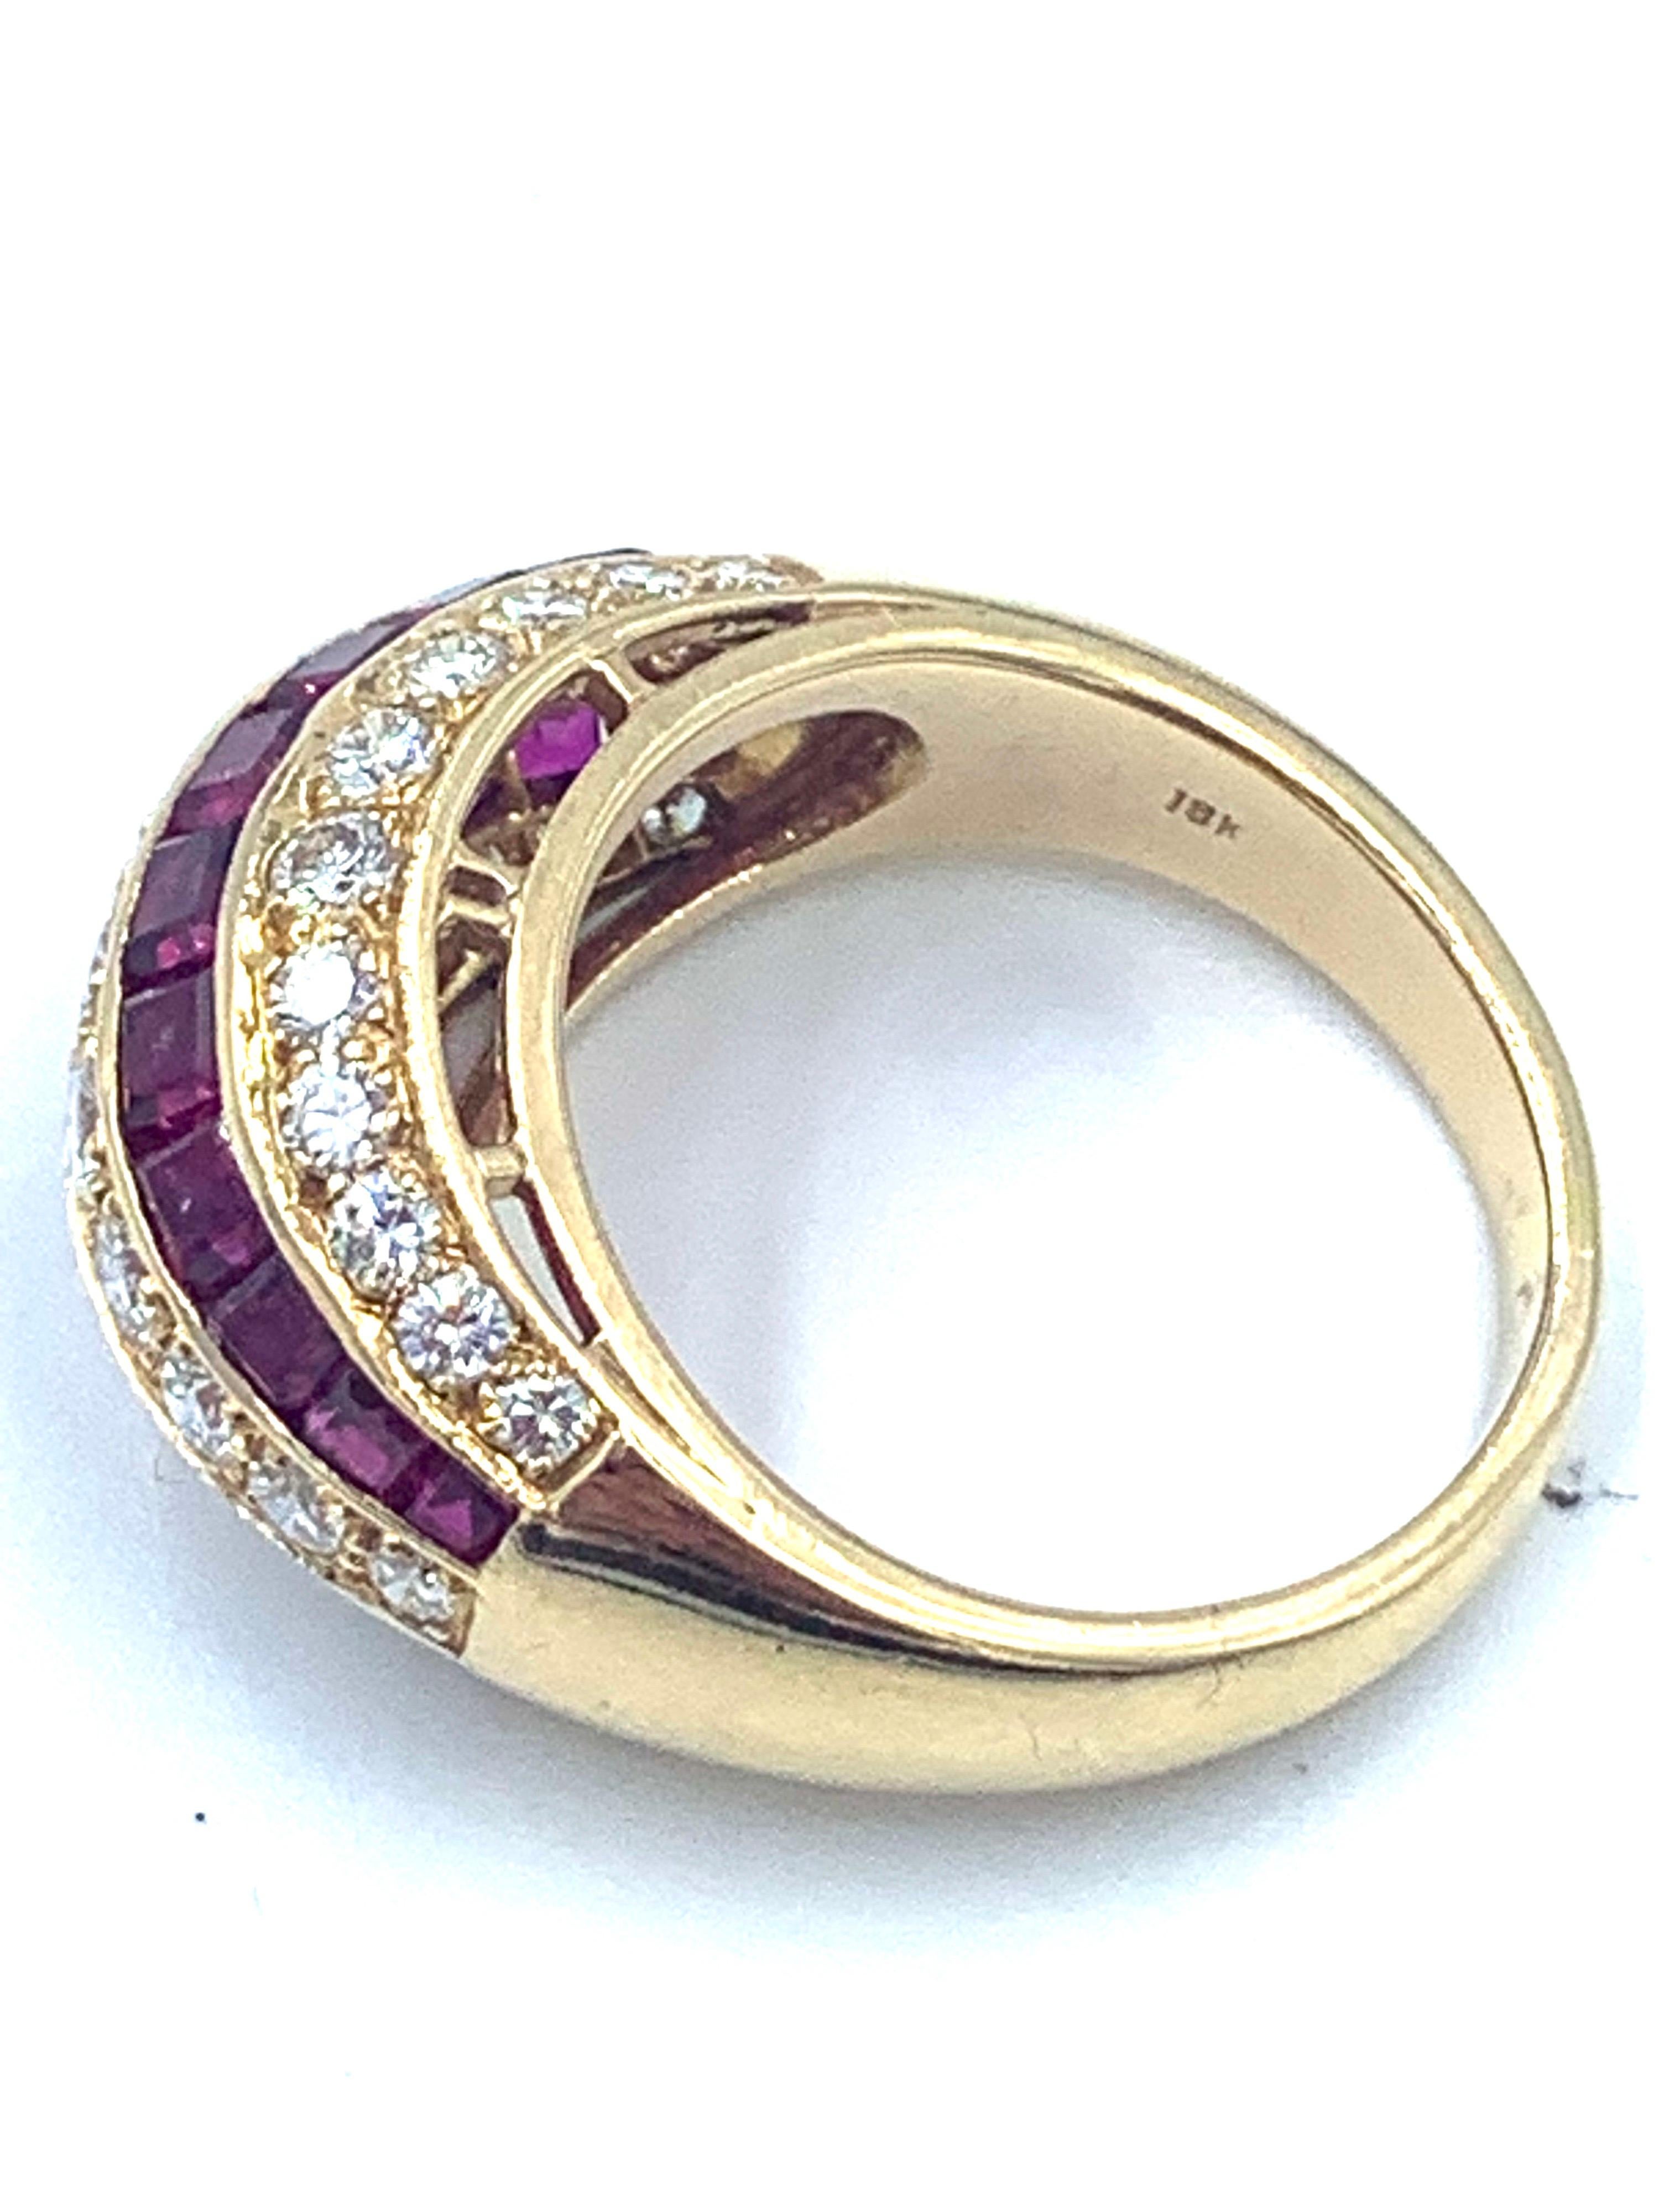 Stunning Oscar Heyman Ruby and Diamond 18 Karat Yellow Gold Dome Ring 4